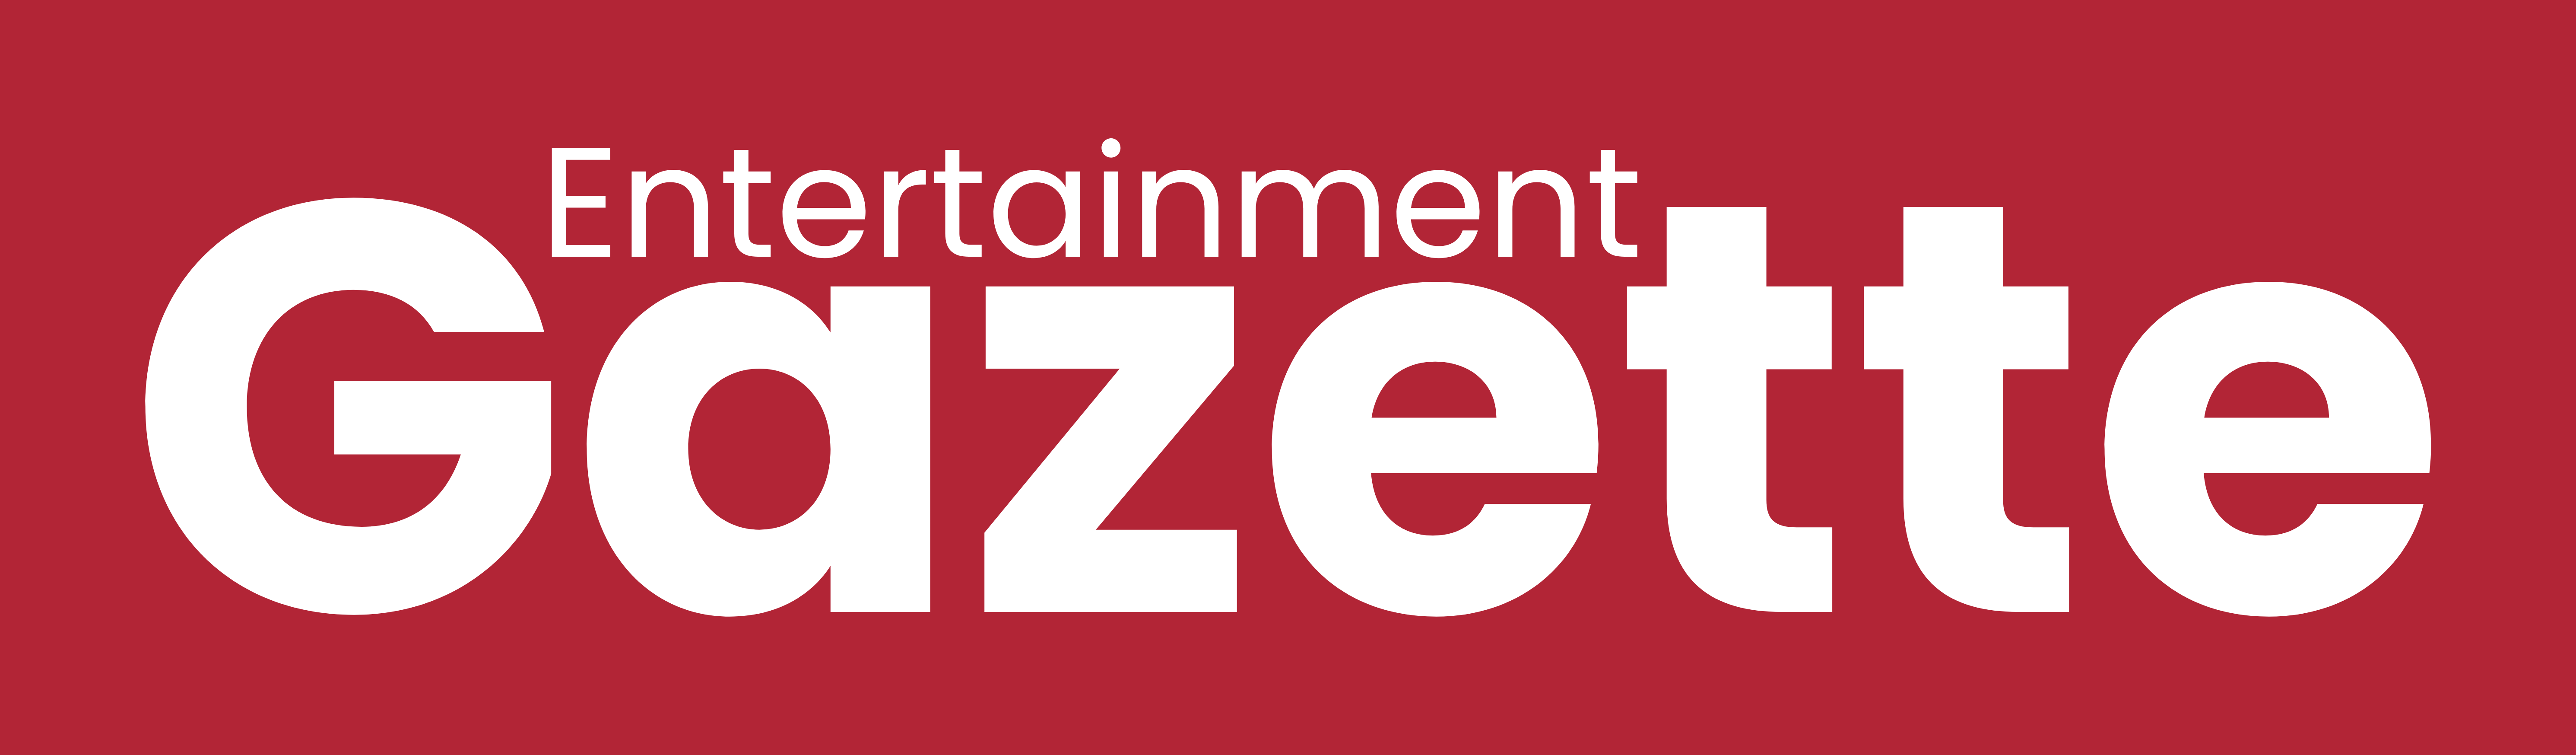 The Entertainment Gazette